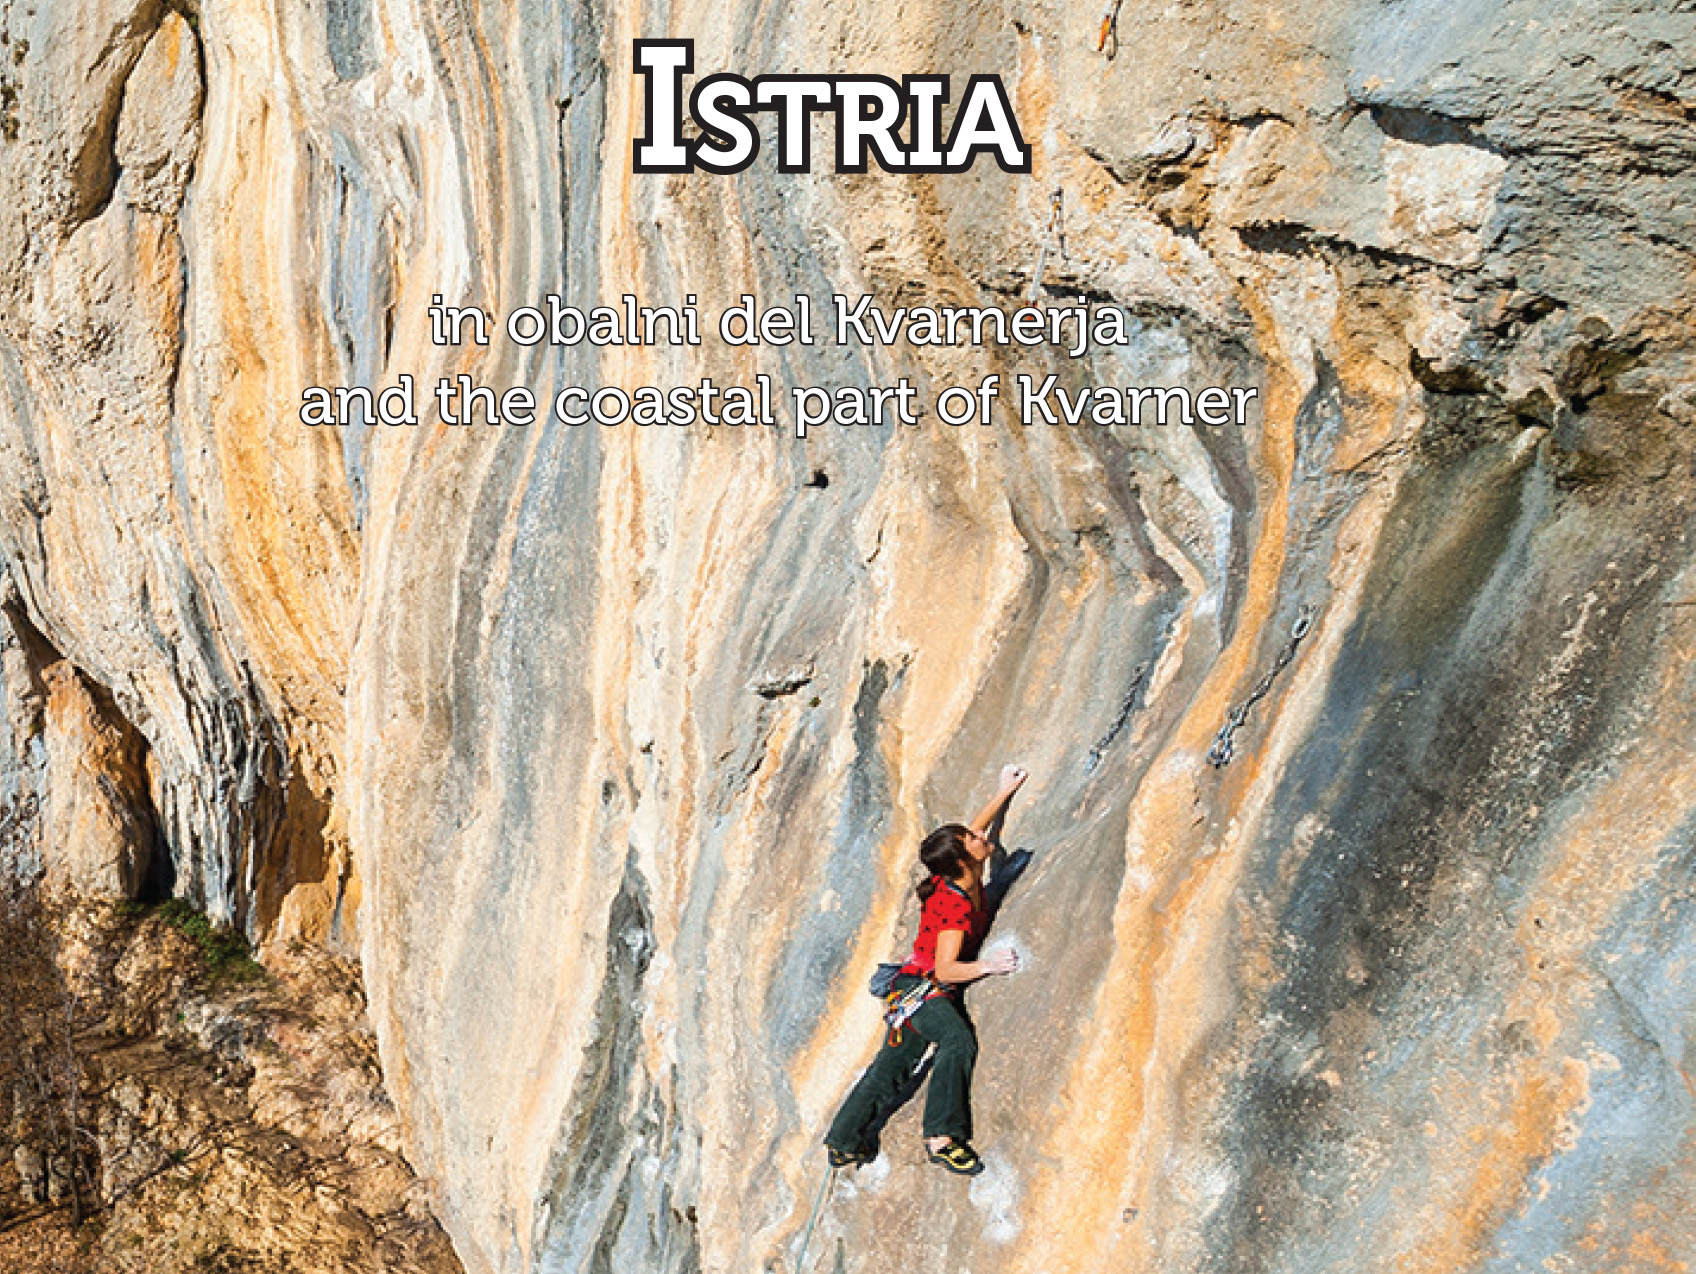 Climbing guidebook Istria